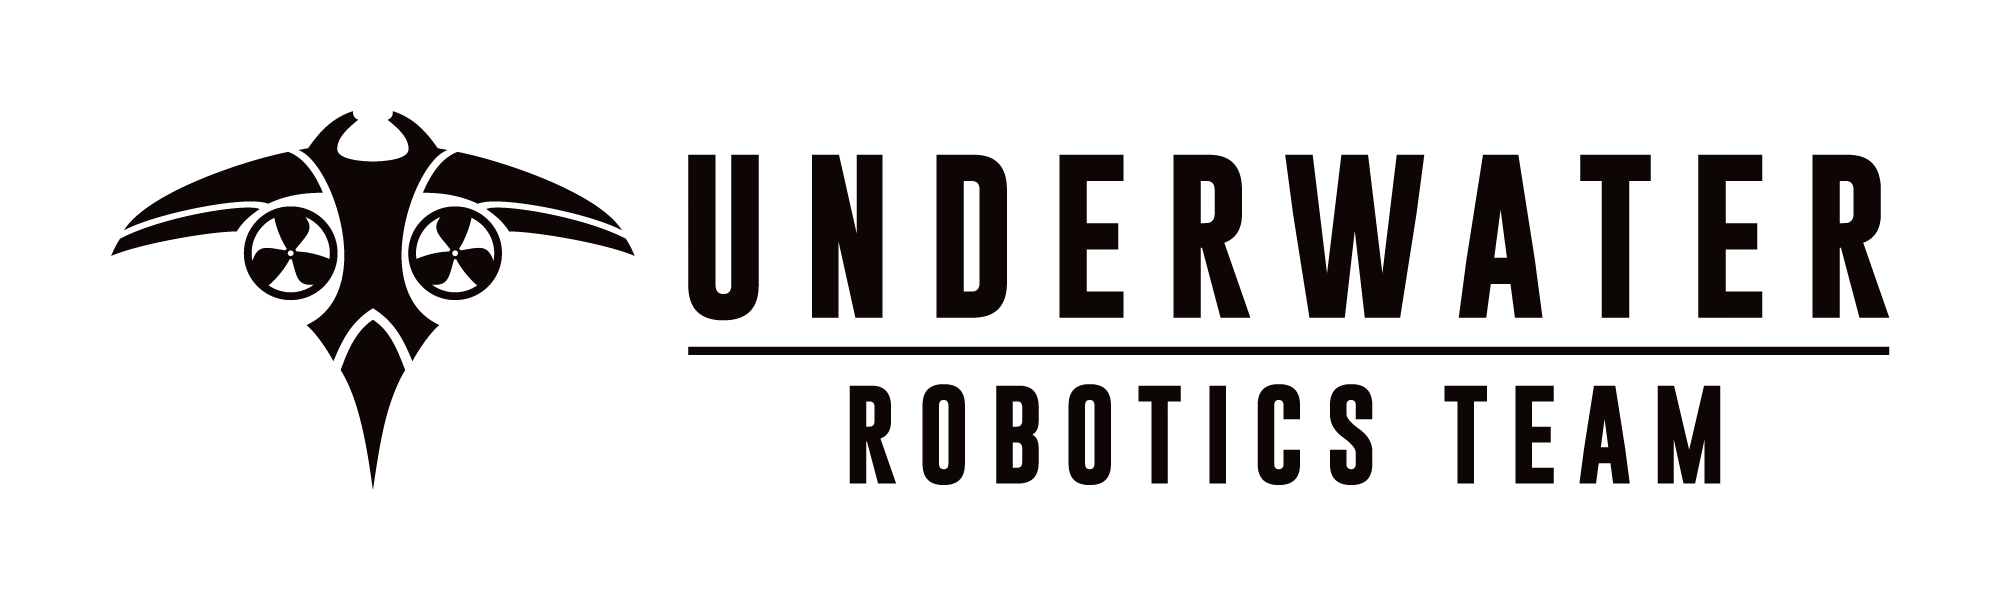 Missouri S&T Underwater Robotics